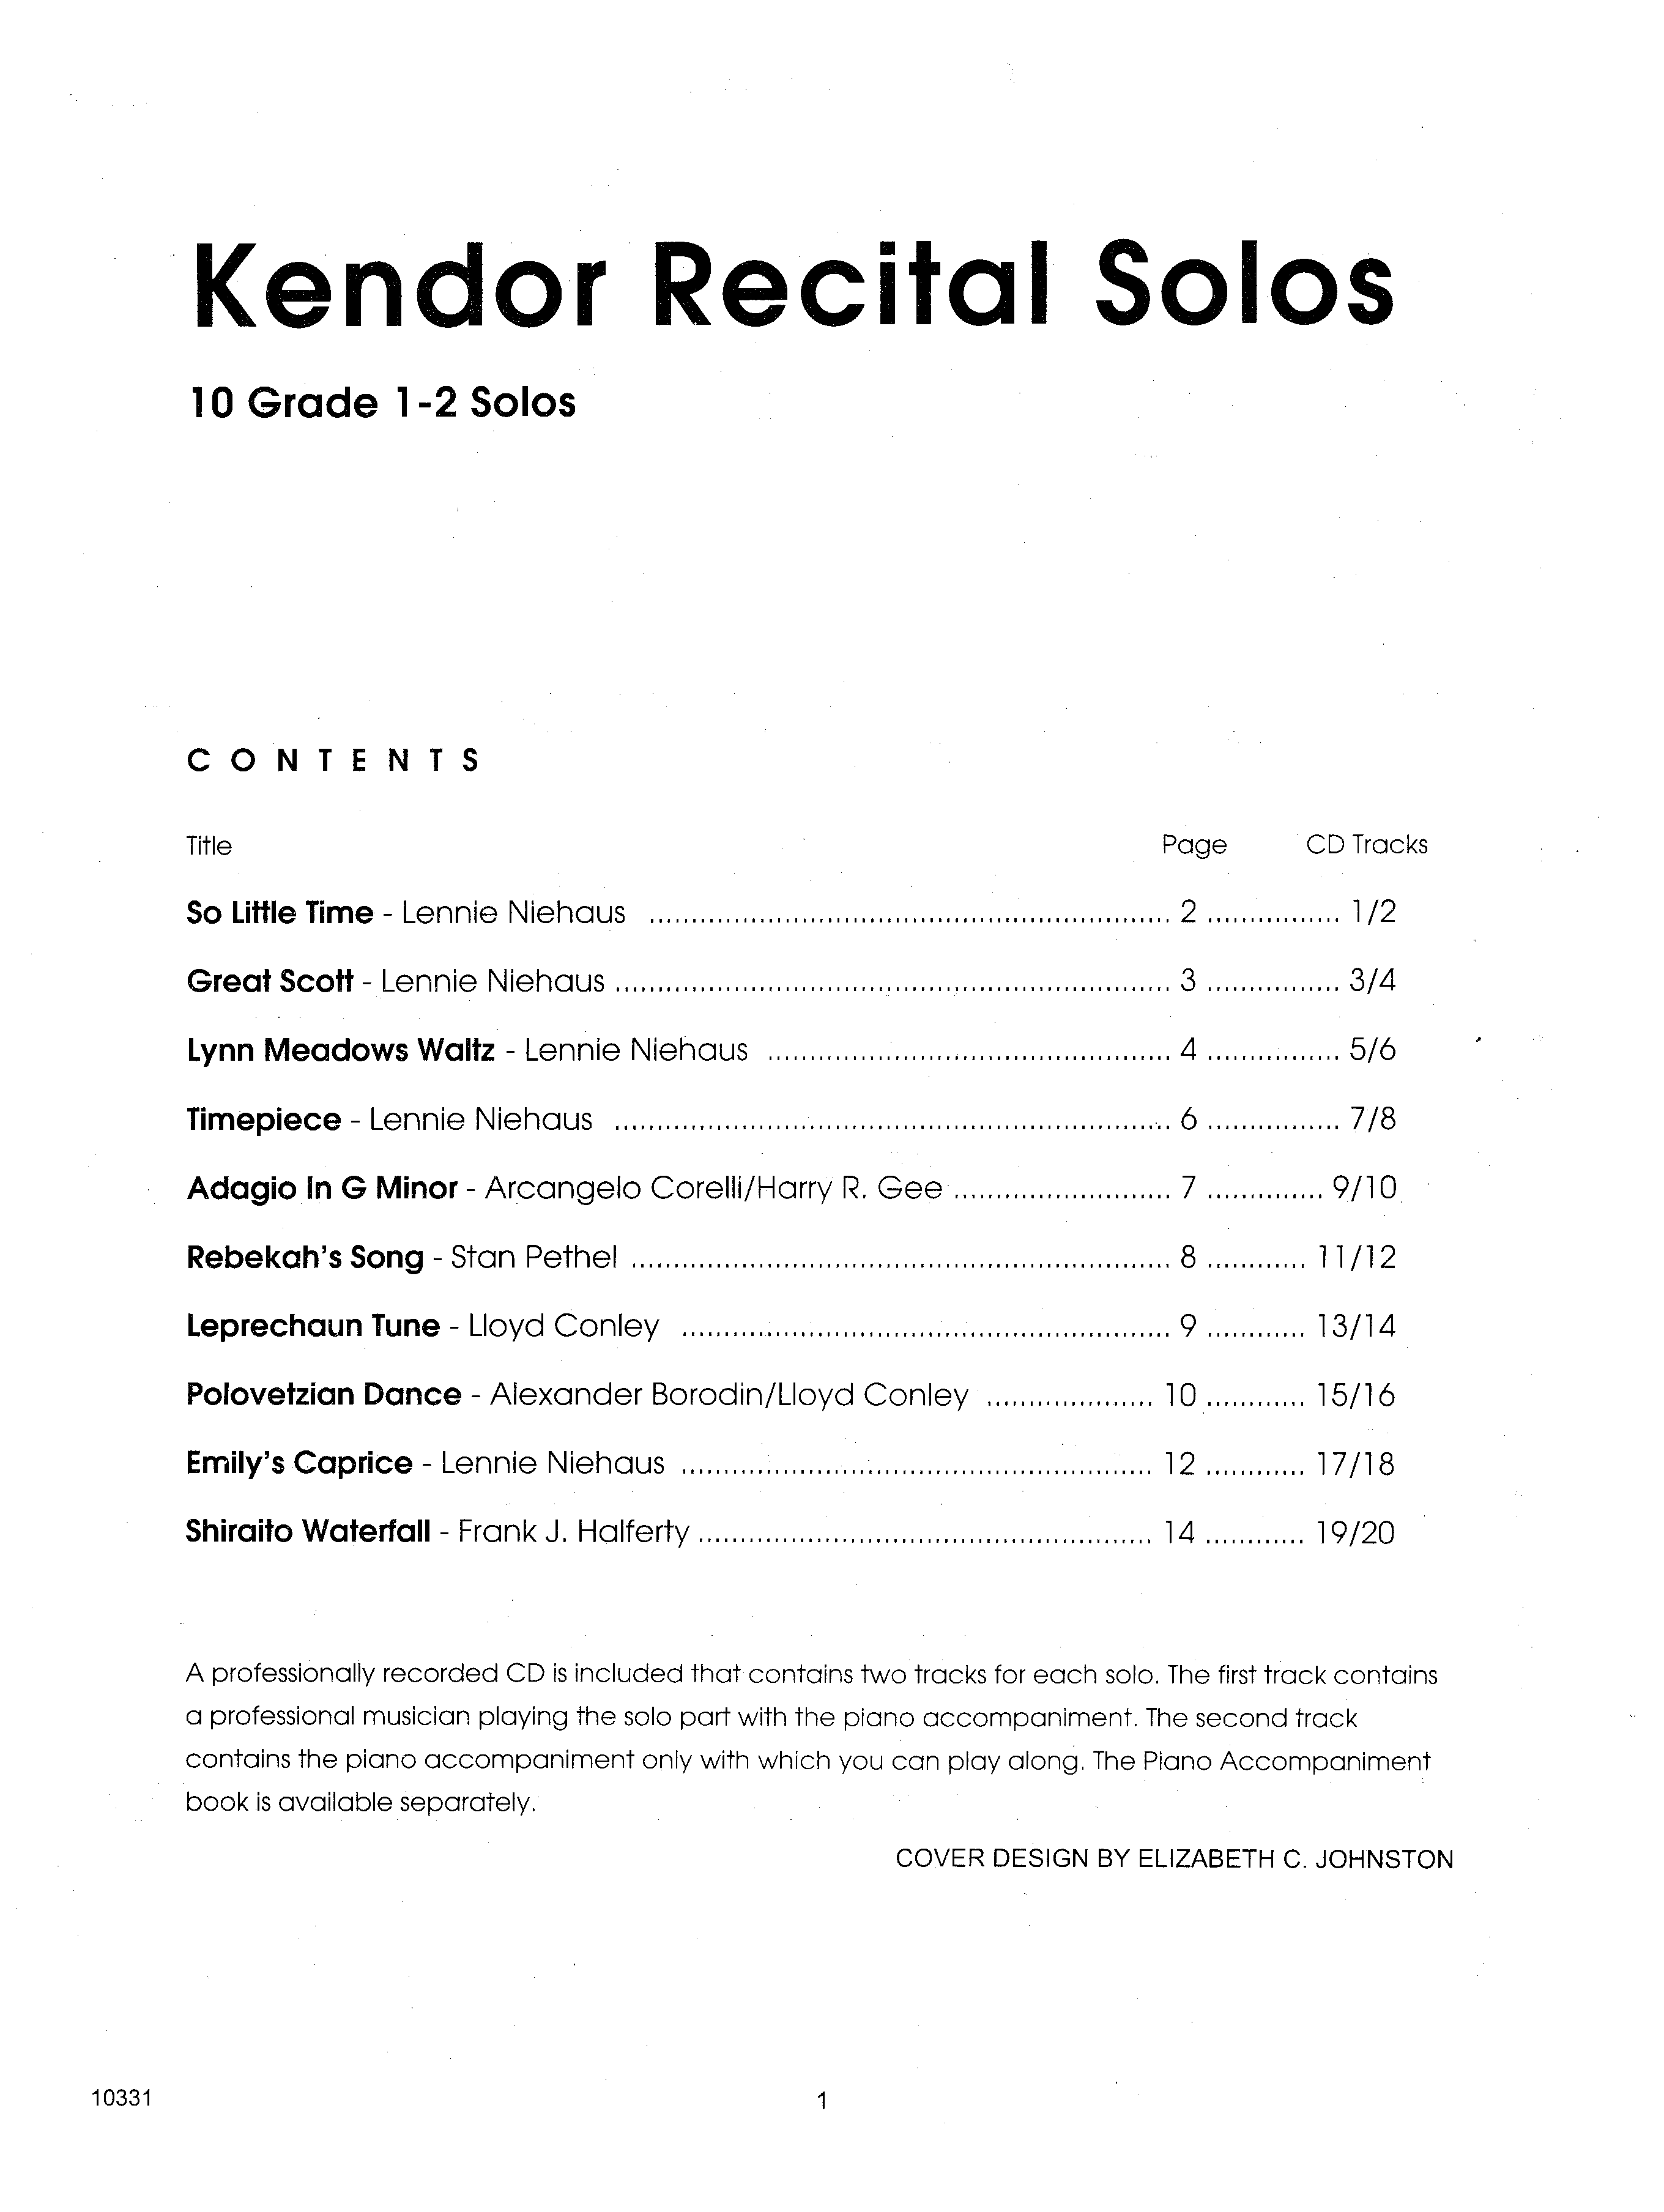 Download Various Kendor Recital Solos - Flute Sheet Music